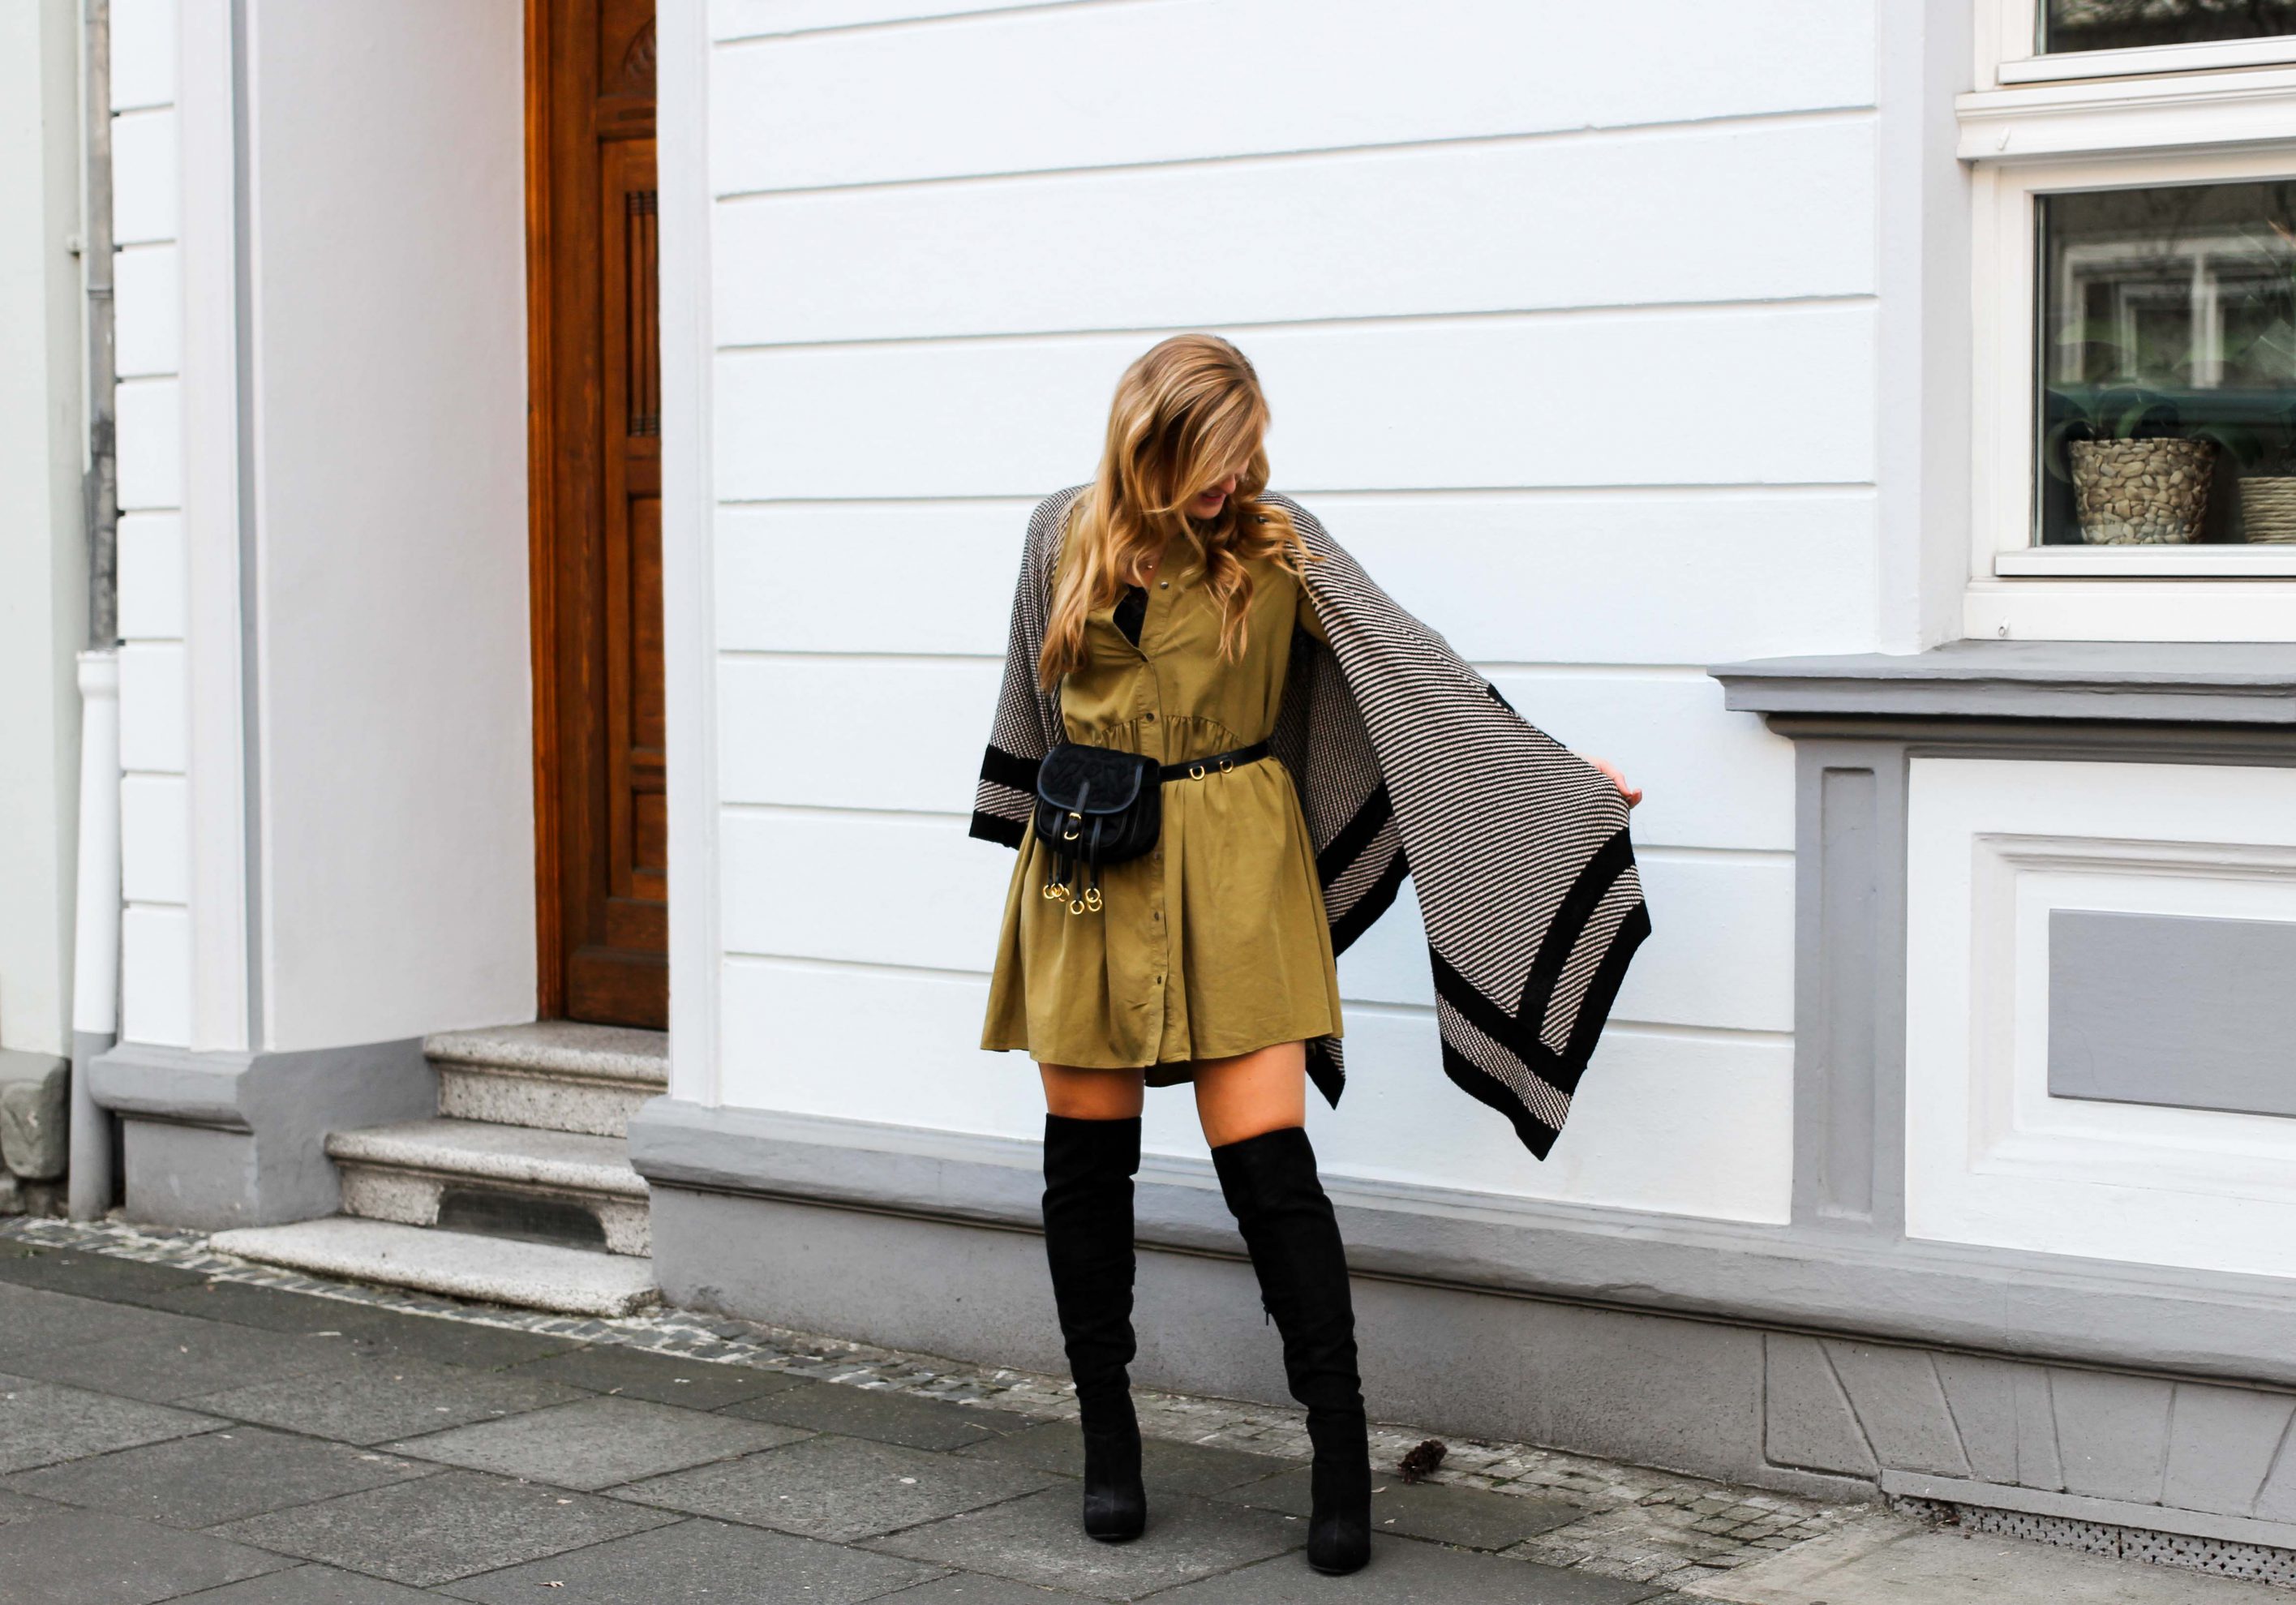 Overknees Gürteltasche Prada Poncho Second-Hand Kleidung kombinieren Streetstyle Outfit Bonn Zara Kleid grün Frühling 2019